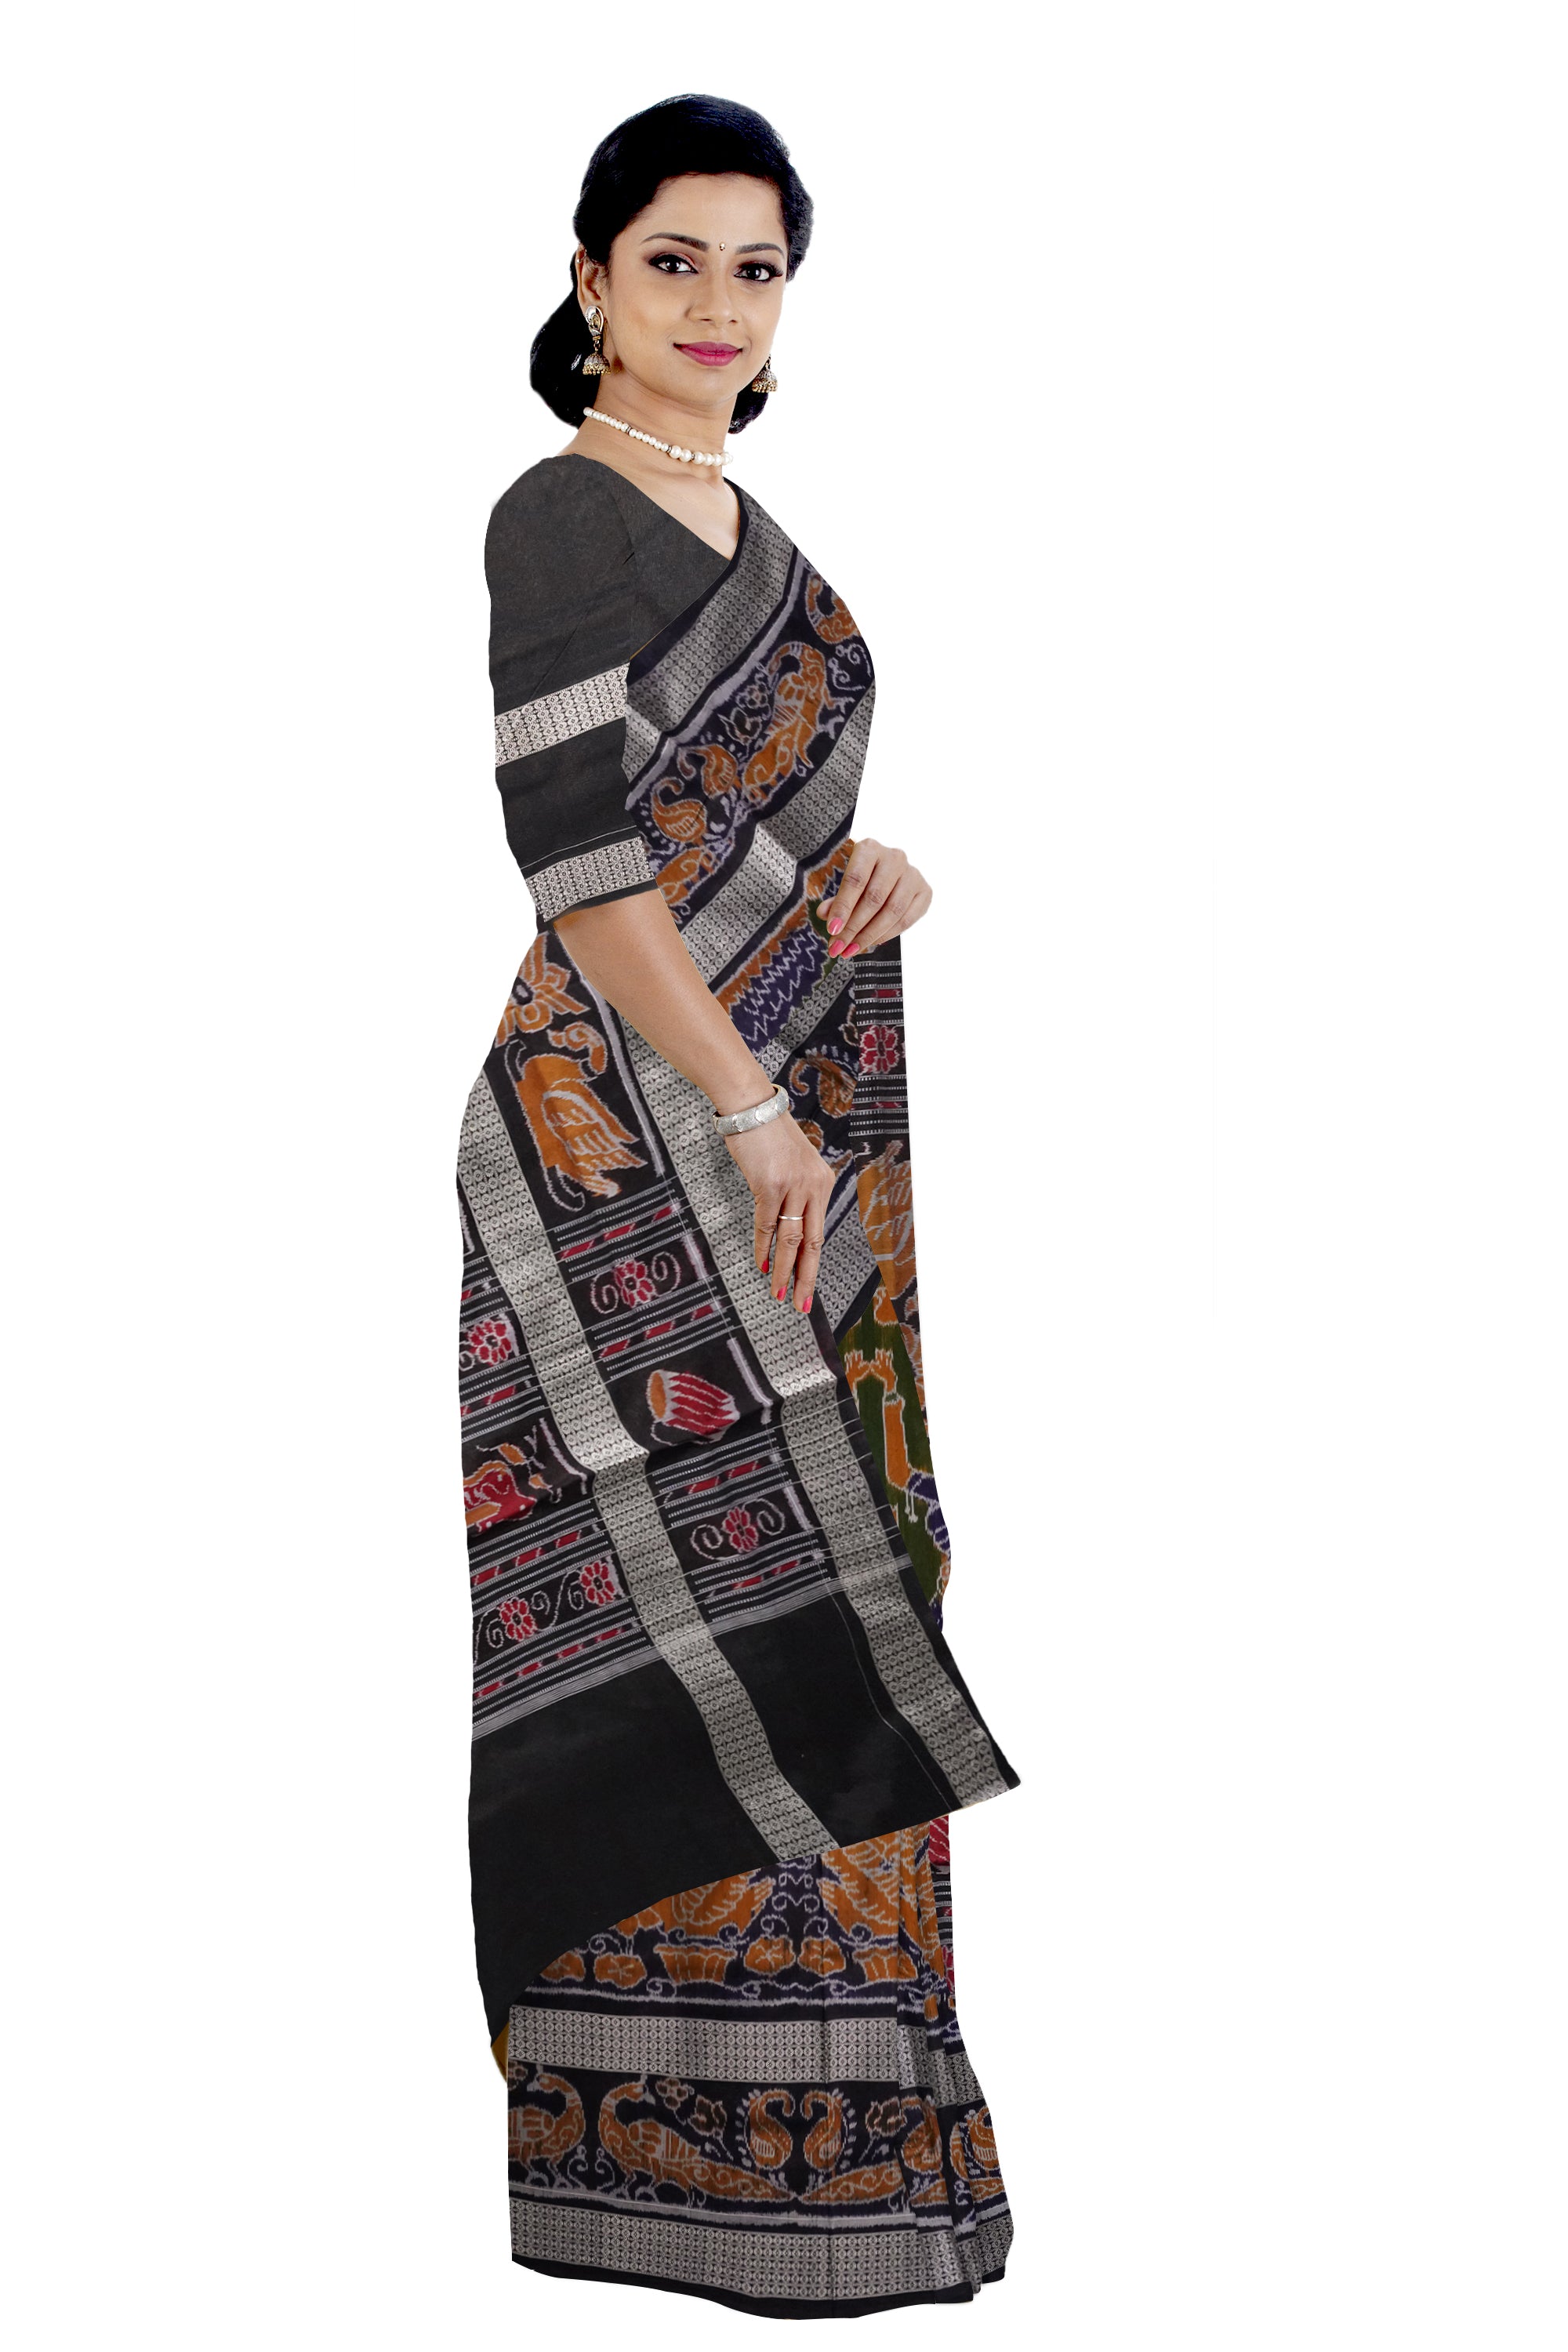 Nartaki and duck pattern pure cotton saree in mehndi,yellow and black color with big border. - Koshali Arts & Crafts Enterprise